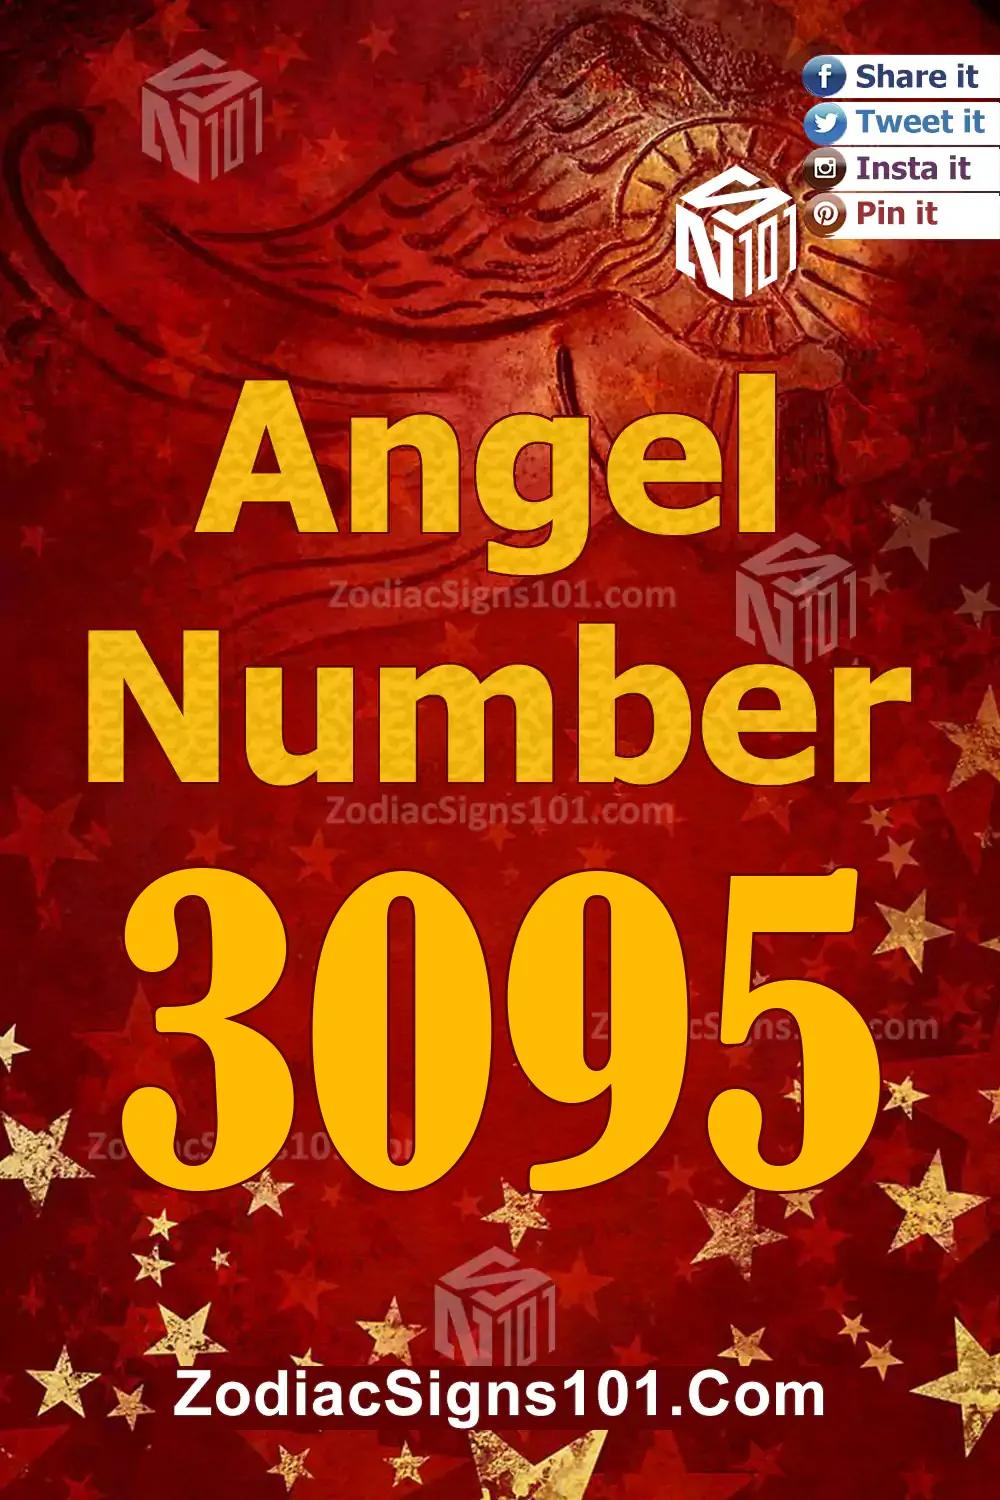 3095-Angel-Number-Meaning.jpg